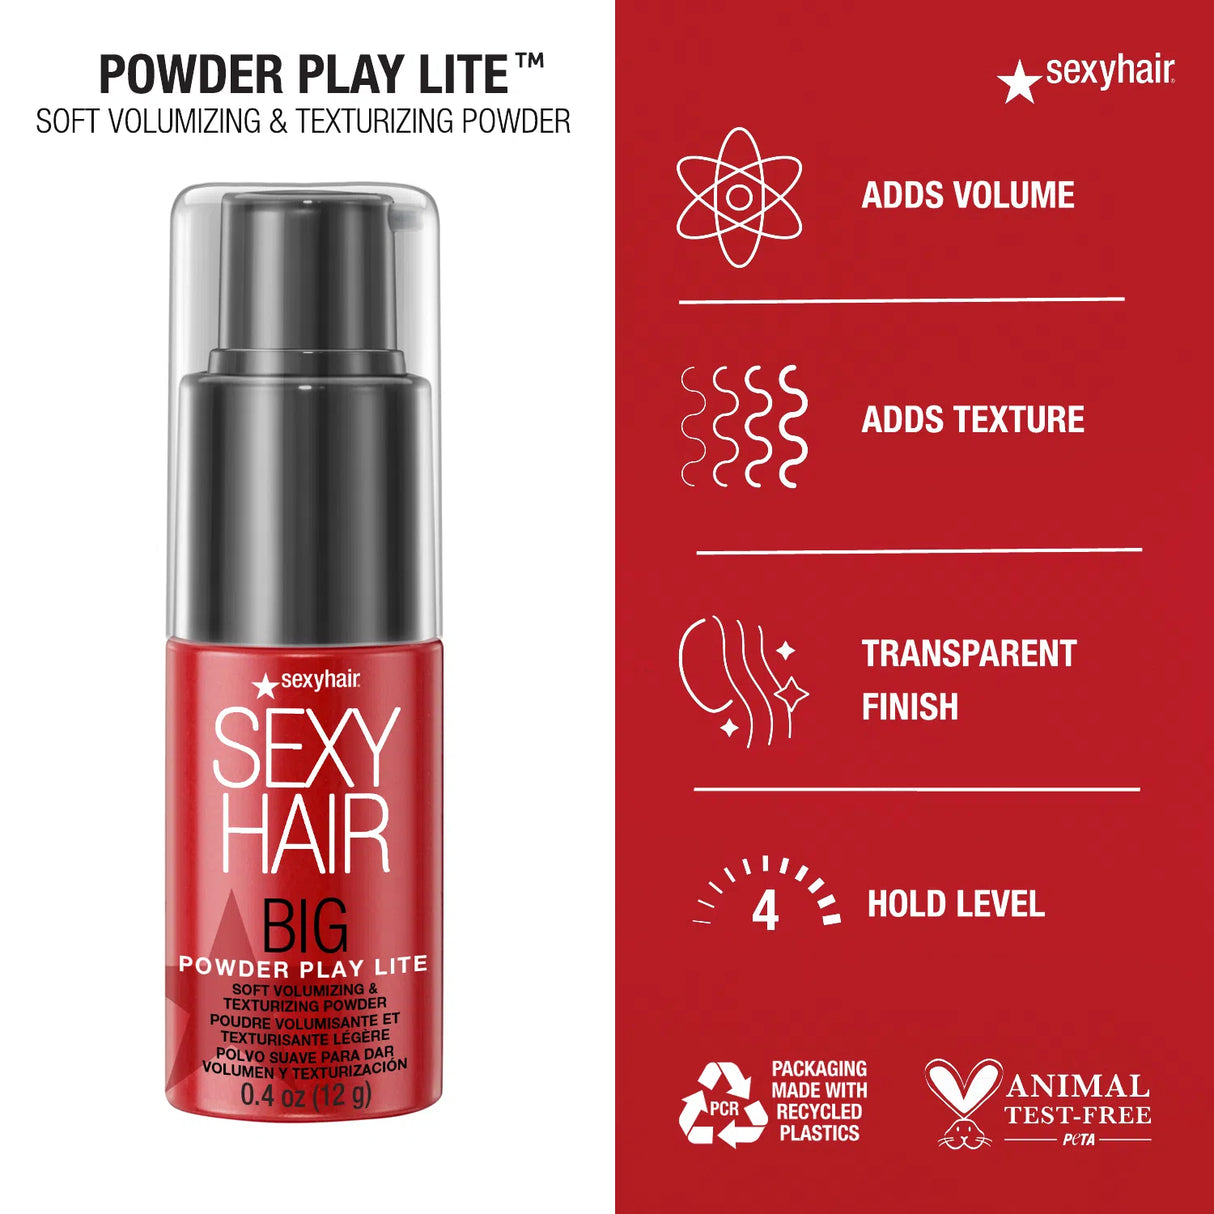 Powder Play Lite Soft Volumizing & Texturizing Powder-Sexy Hair